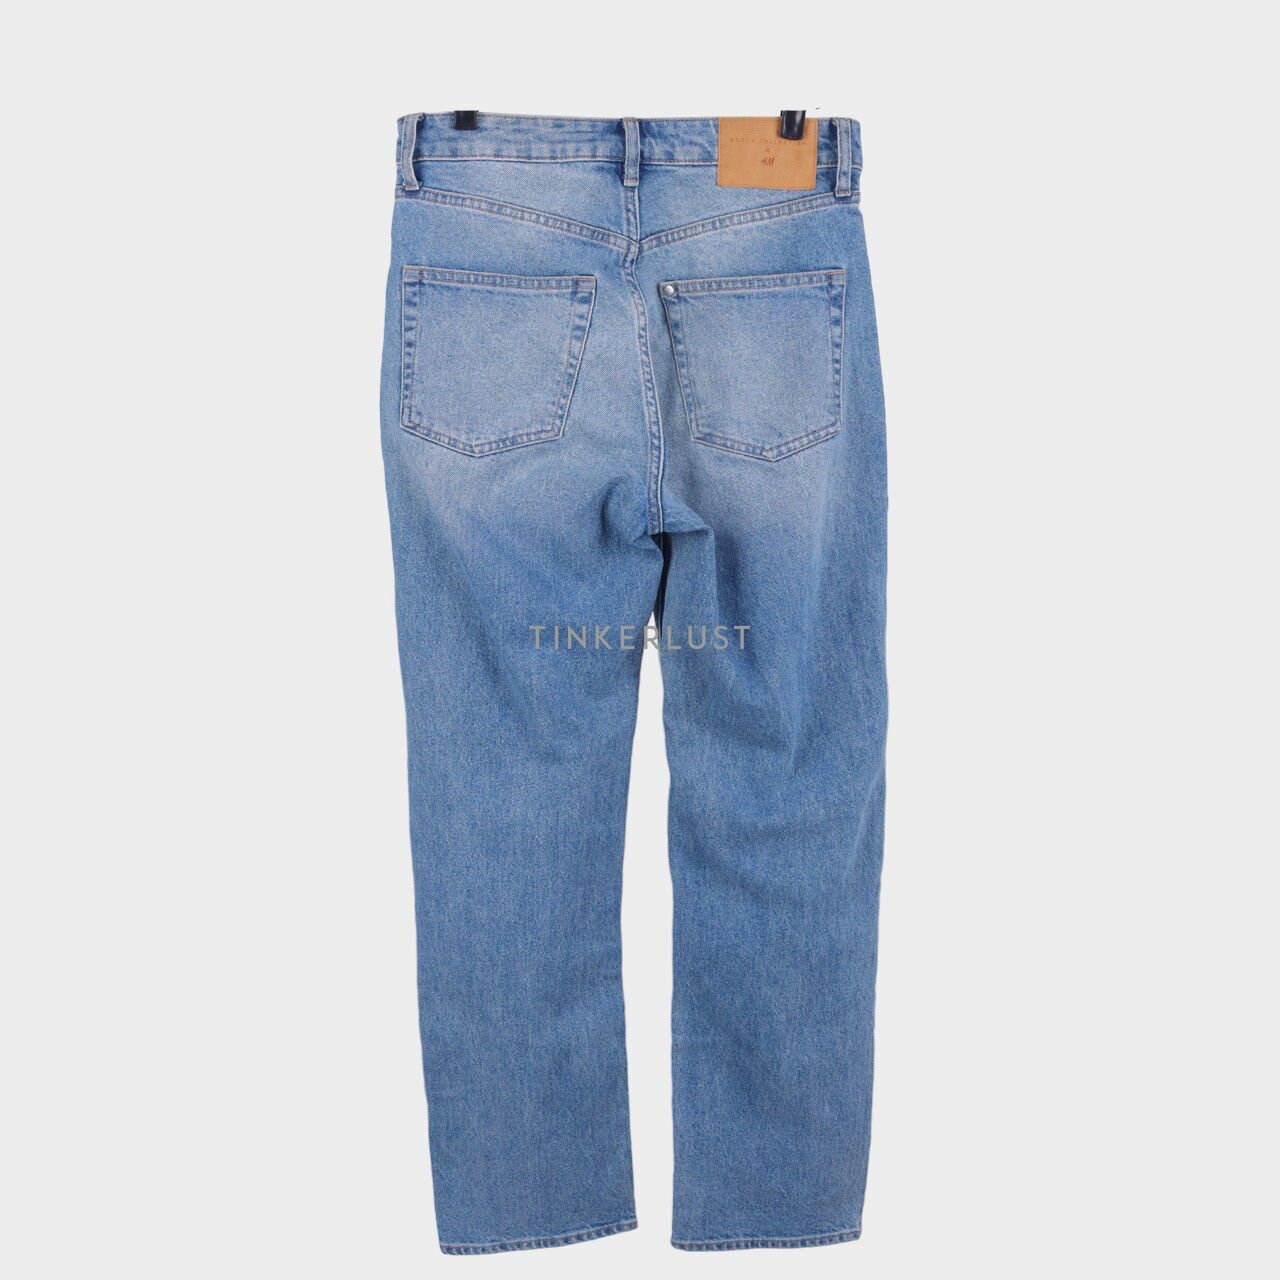 H&M Blue Denim Long Pants